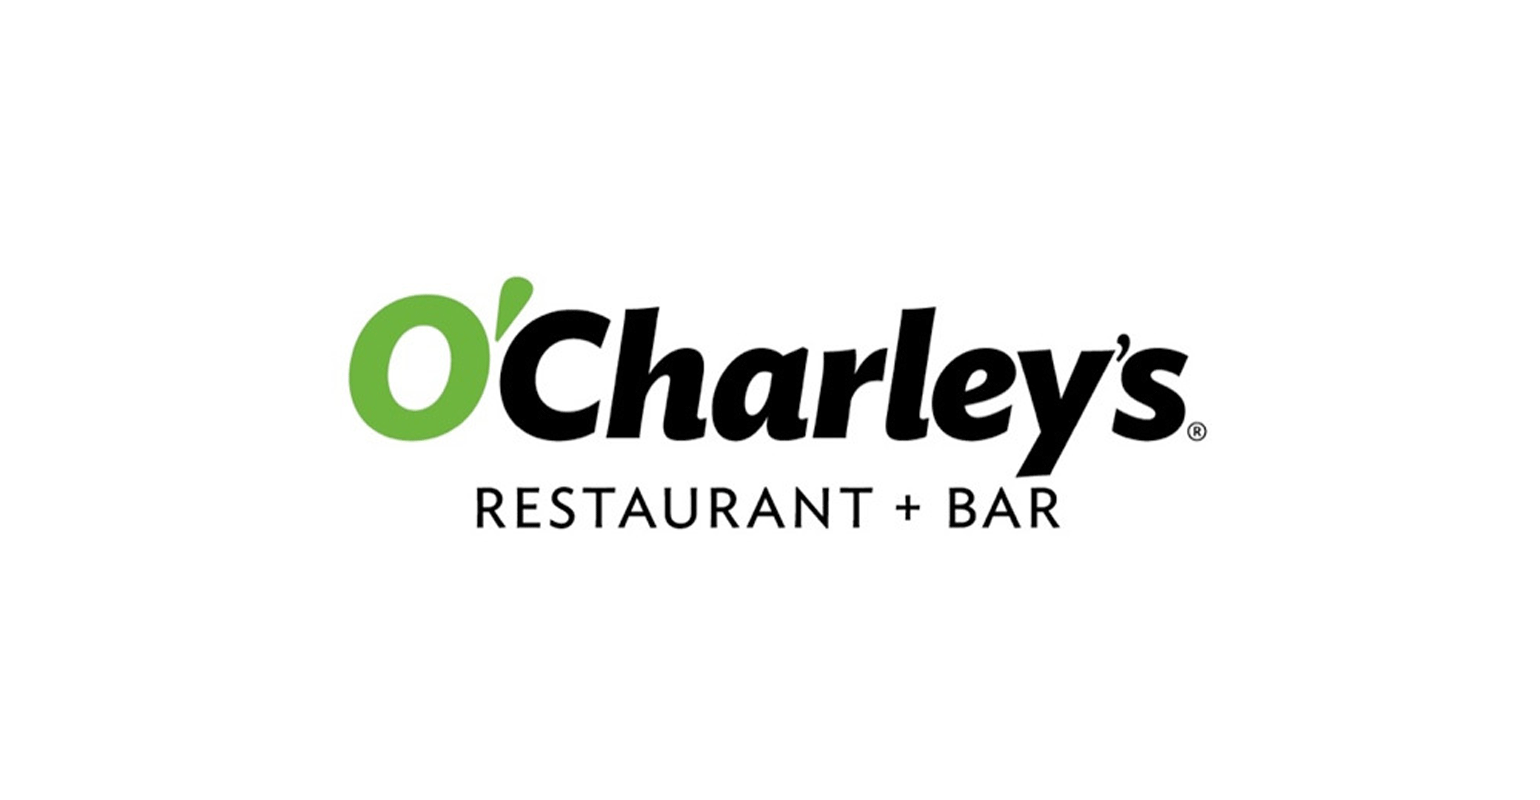 O’Charley’s closes 4 more restaurants Nation's Restaurant News